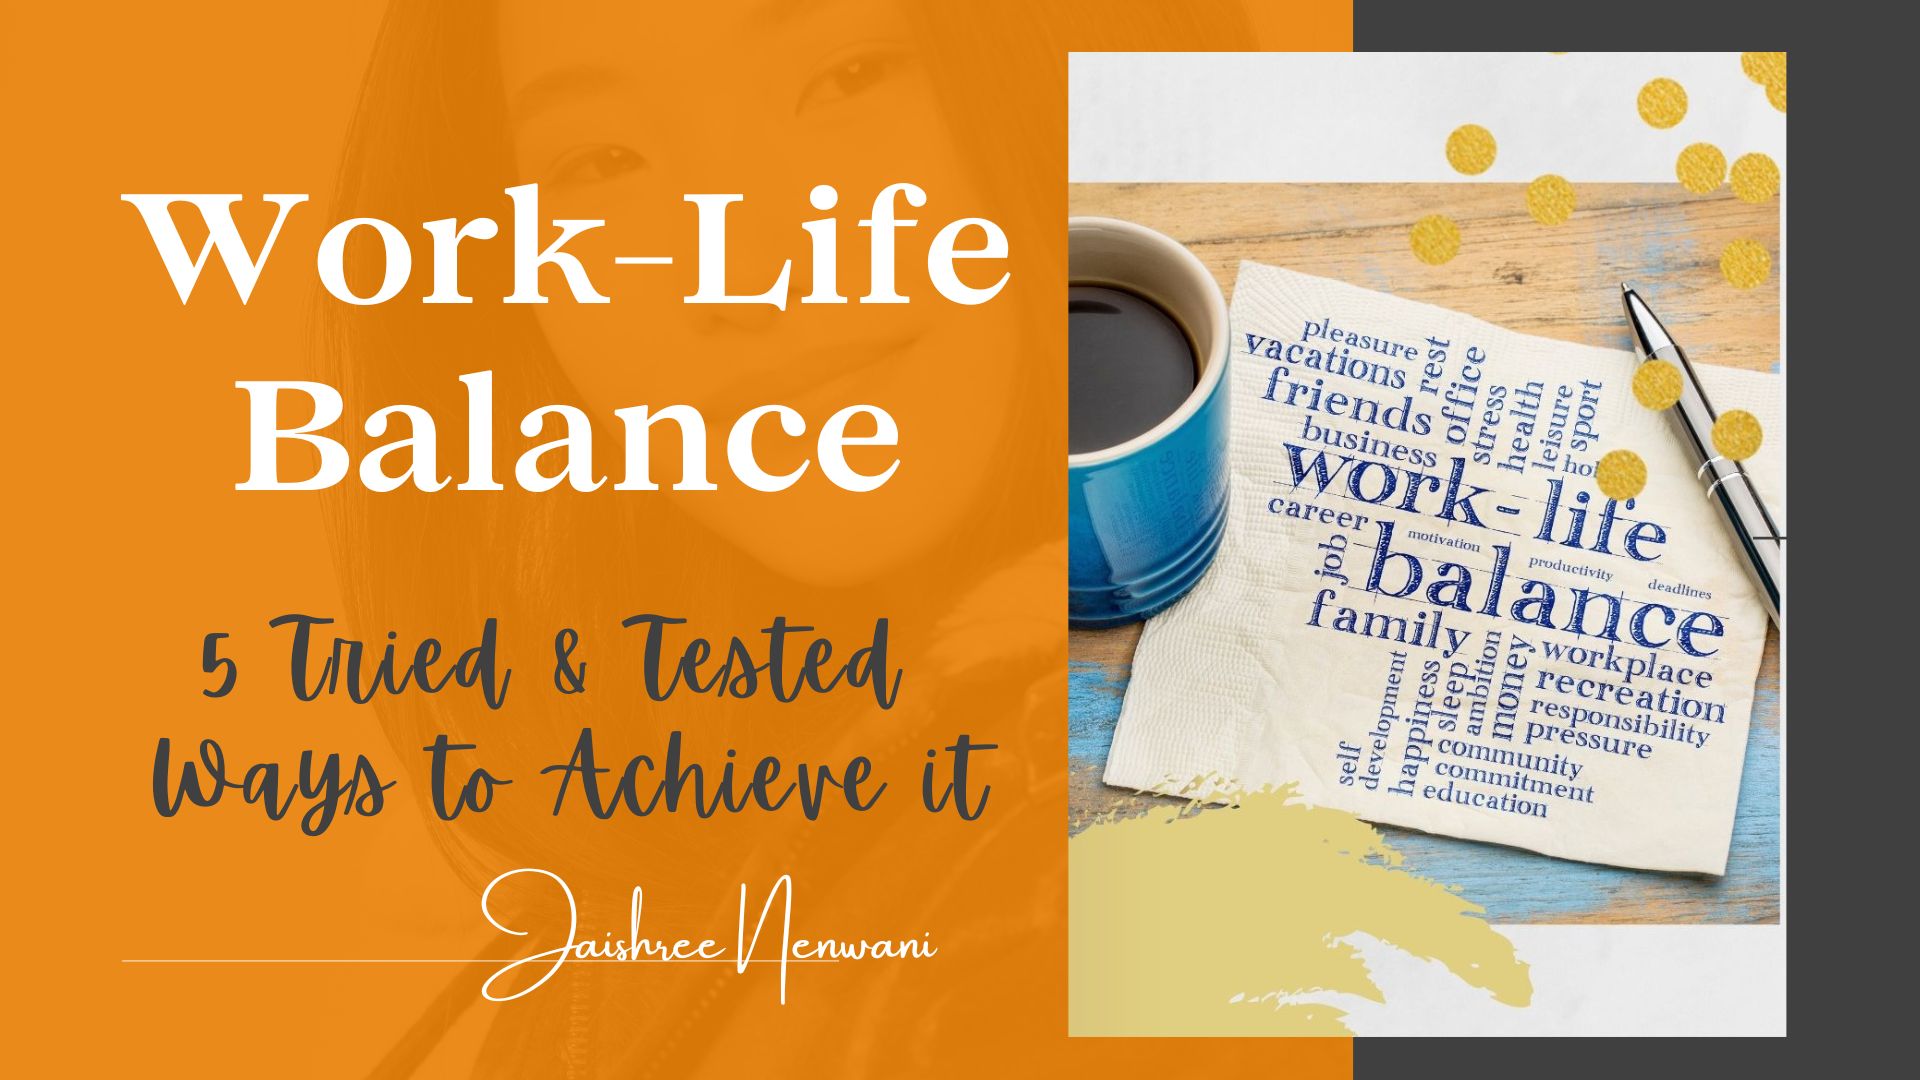 How to Achieve Work-Life Balance